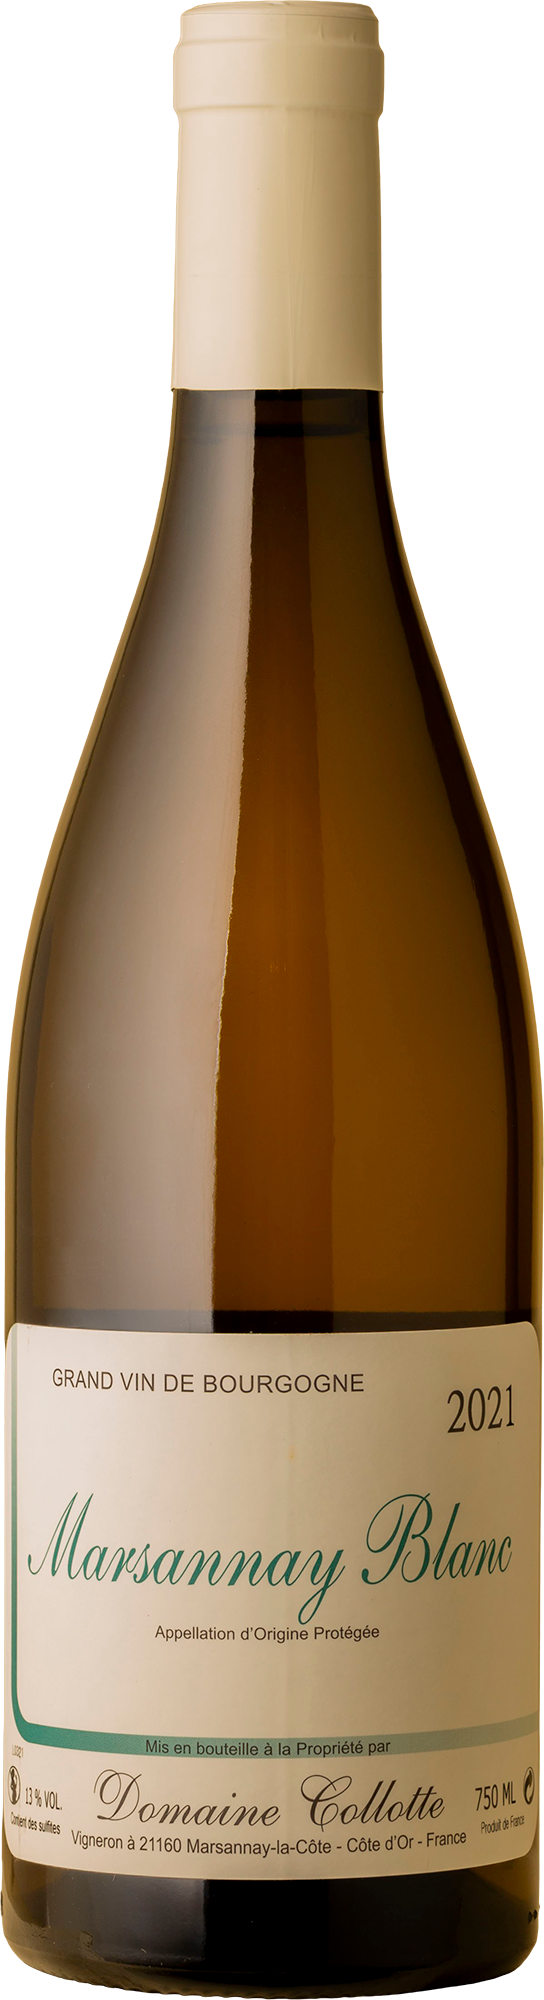 Domaine Collotte - Marsannay Blanc Chardonnay 2021 White Wine